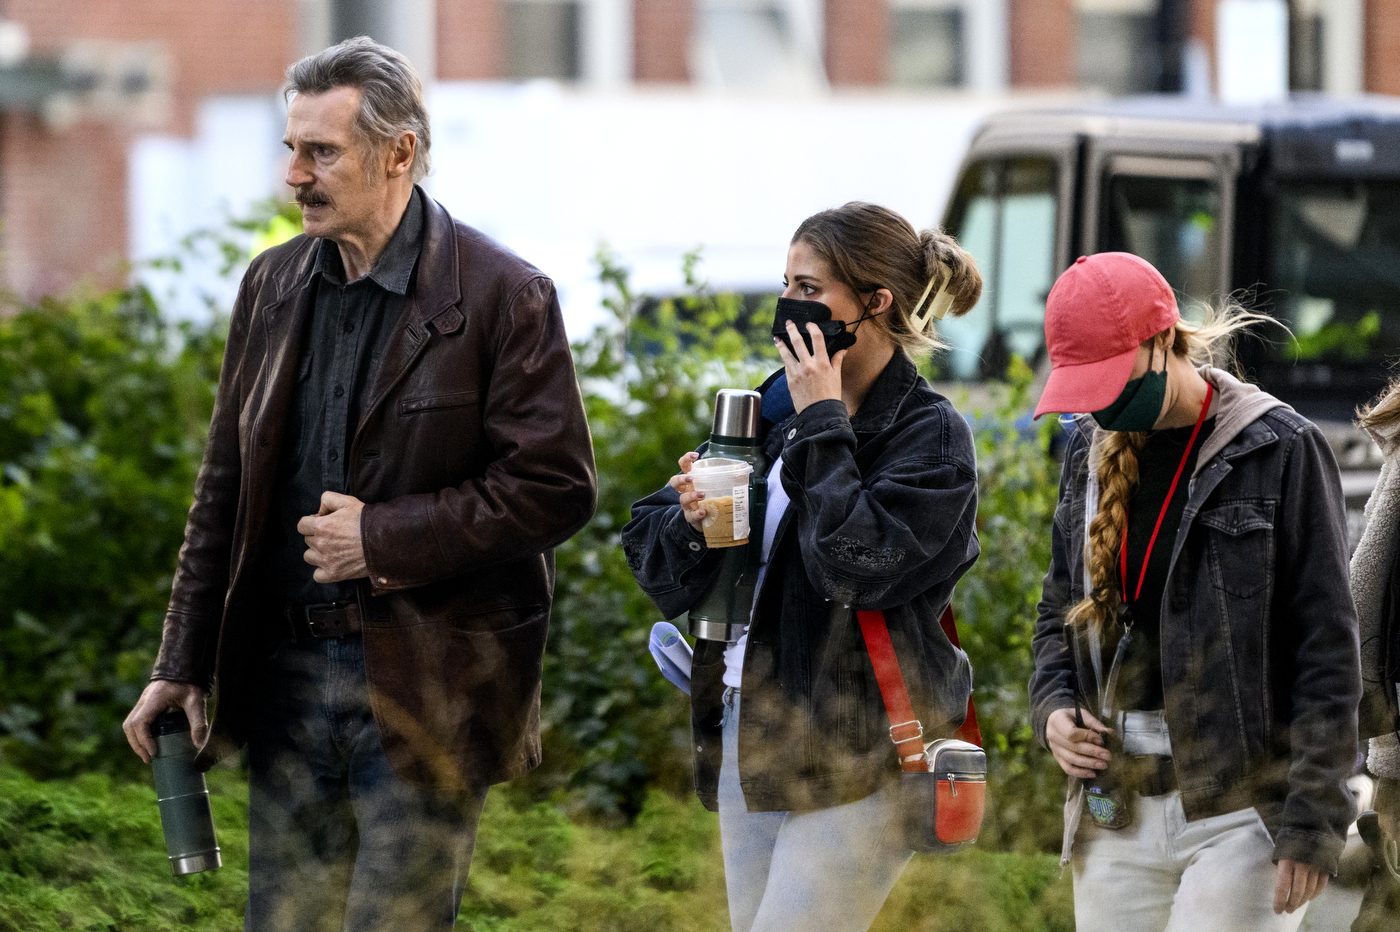 Liam Neeson Films Scene for New Movie ‘Thug’ at Northeastern